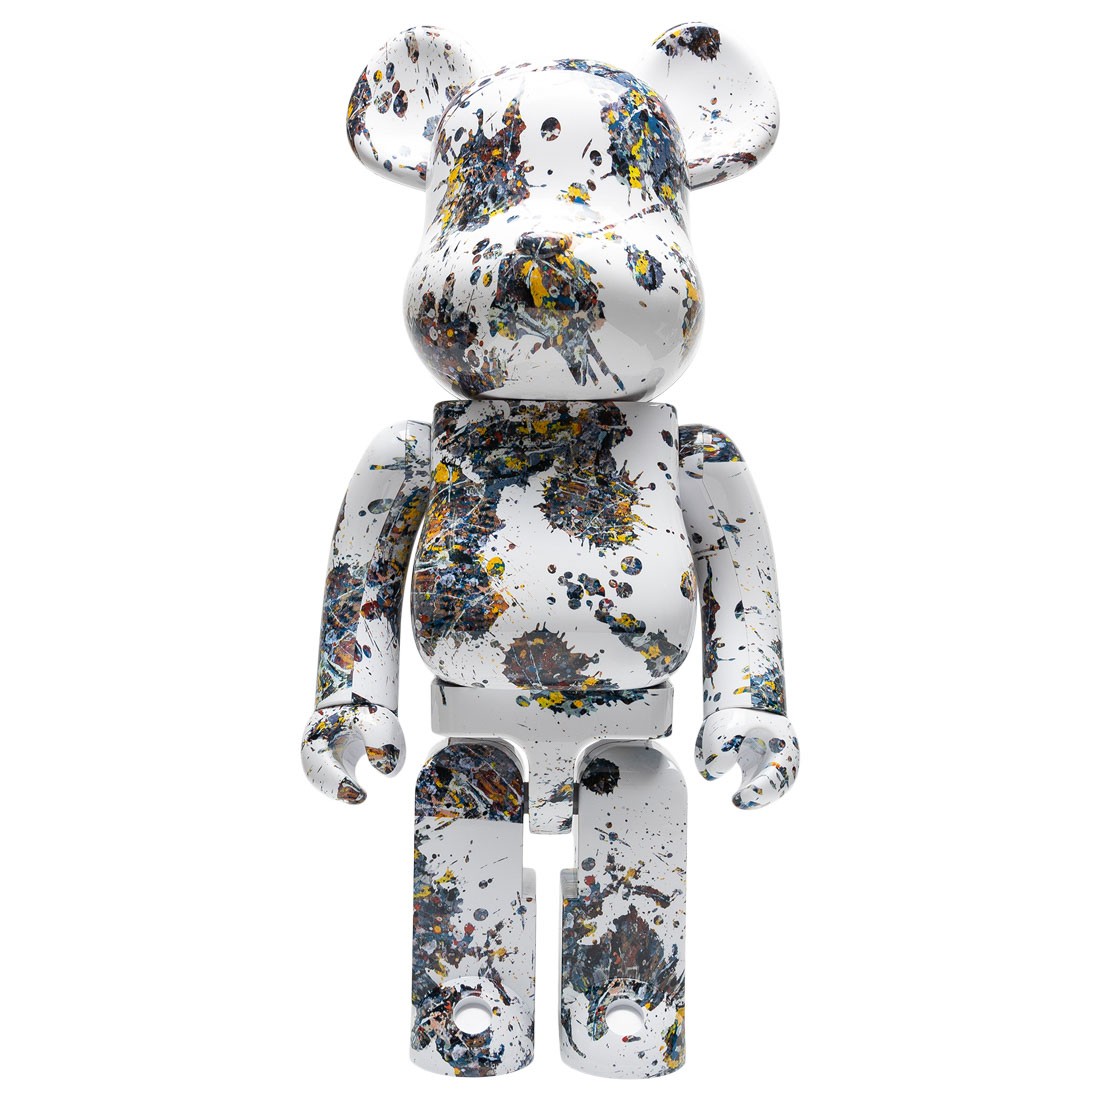 Medicom Jackson Pollock Studio Splash 1000% Bearbrick Figure multi